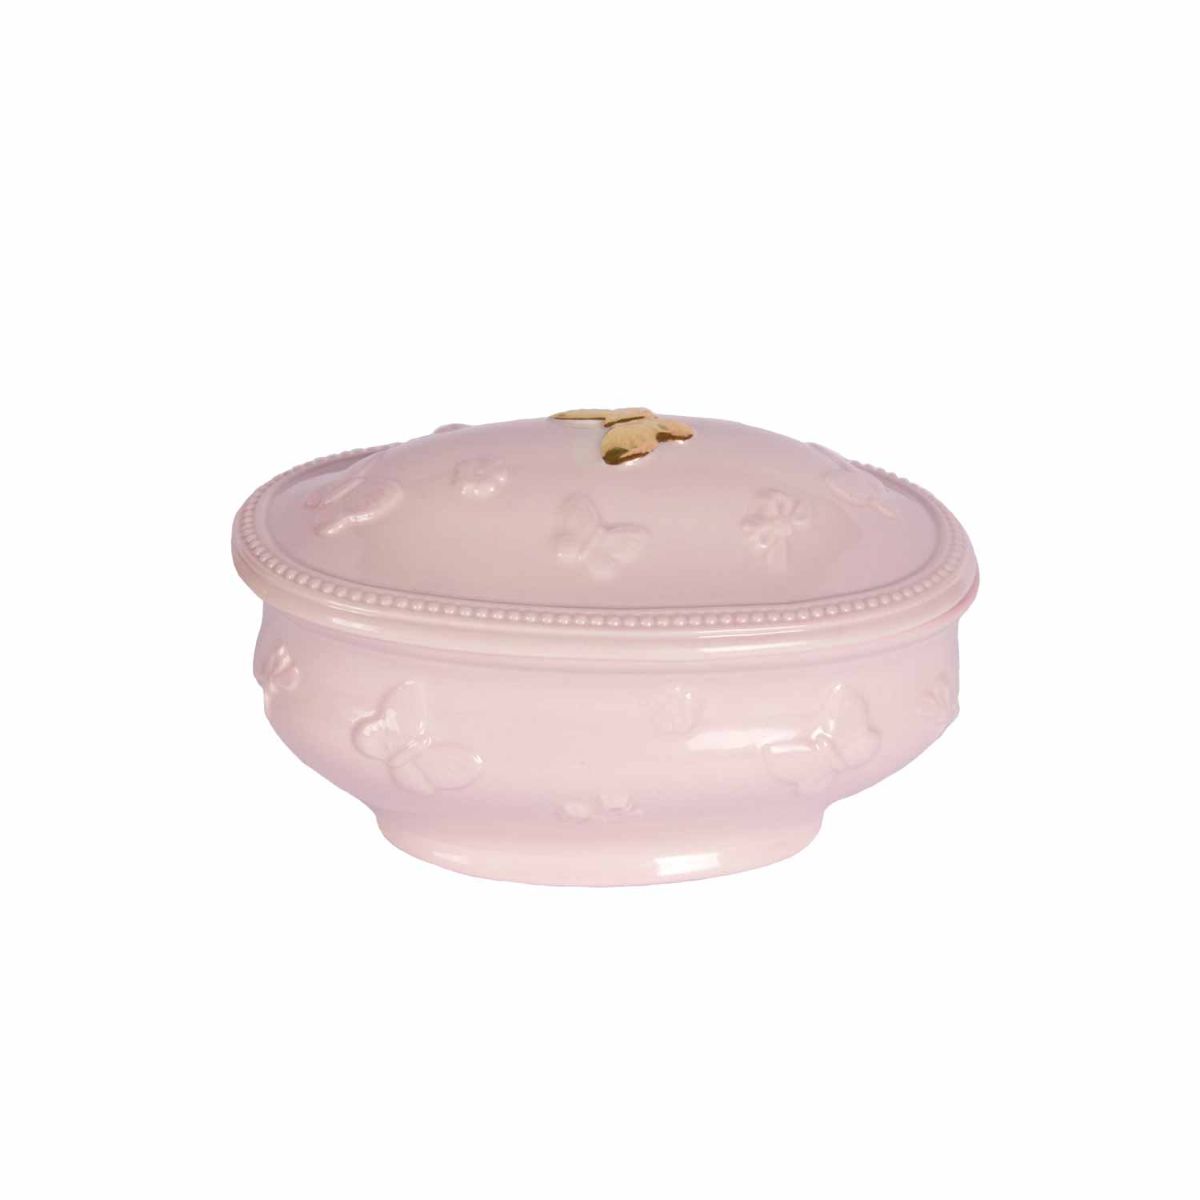 Butterfly Oval Trinket Box - Pink